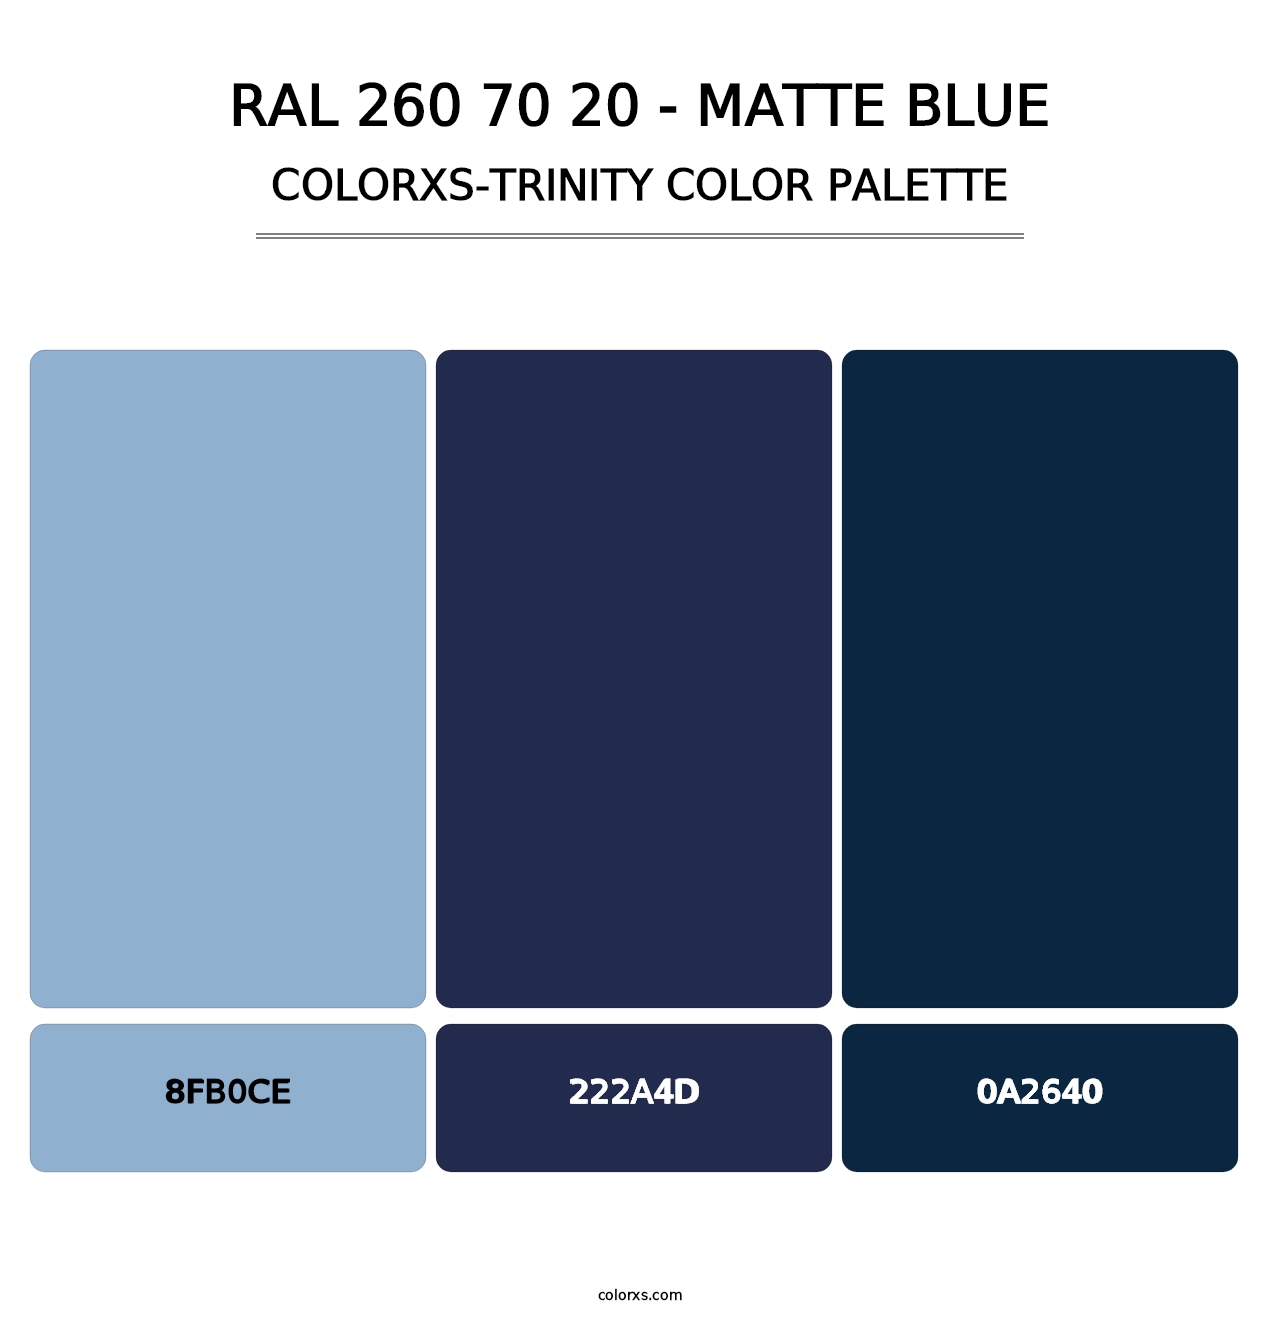 RAL 260 70 20 - Matte Blue - Colorxs Trinity Palette